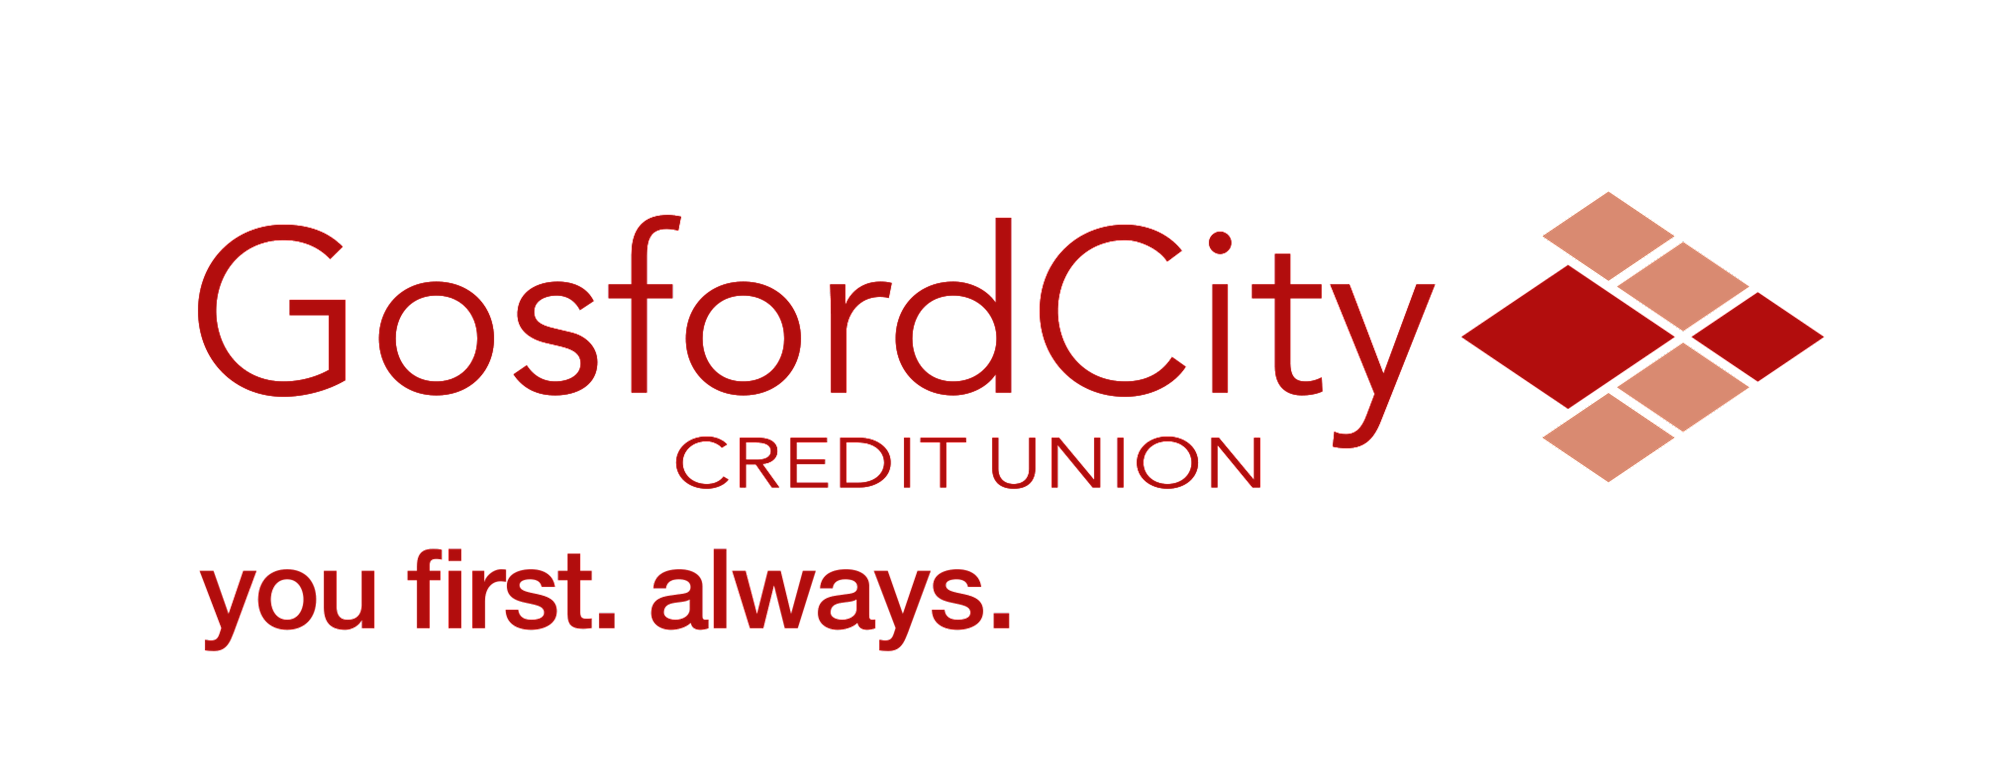 Gosford City Credit Union